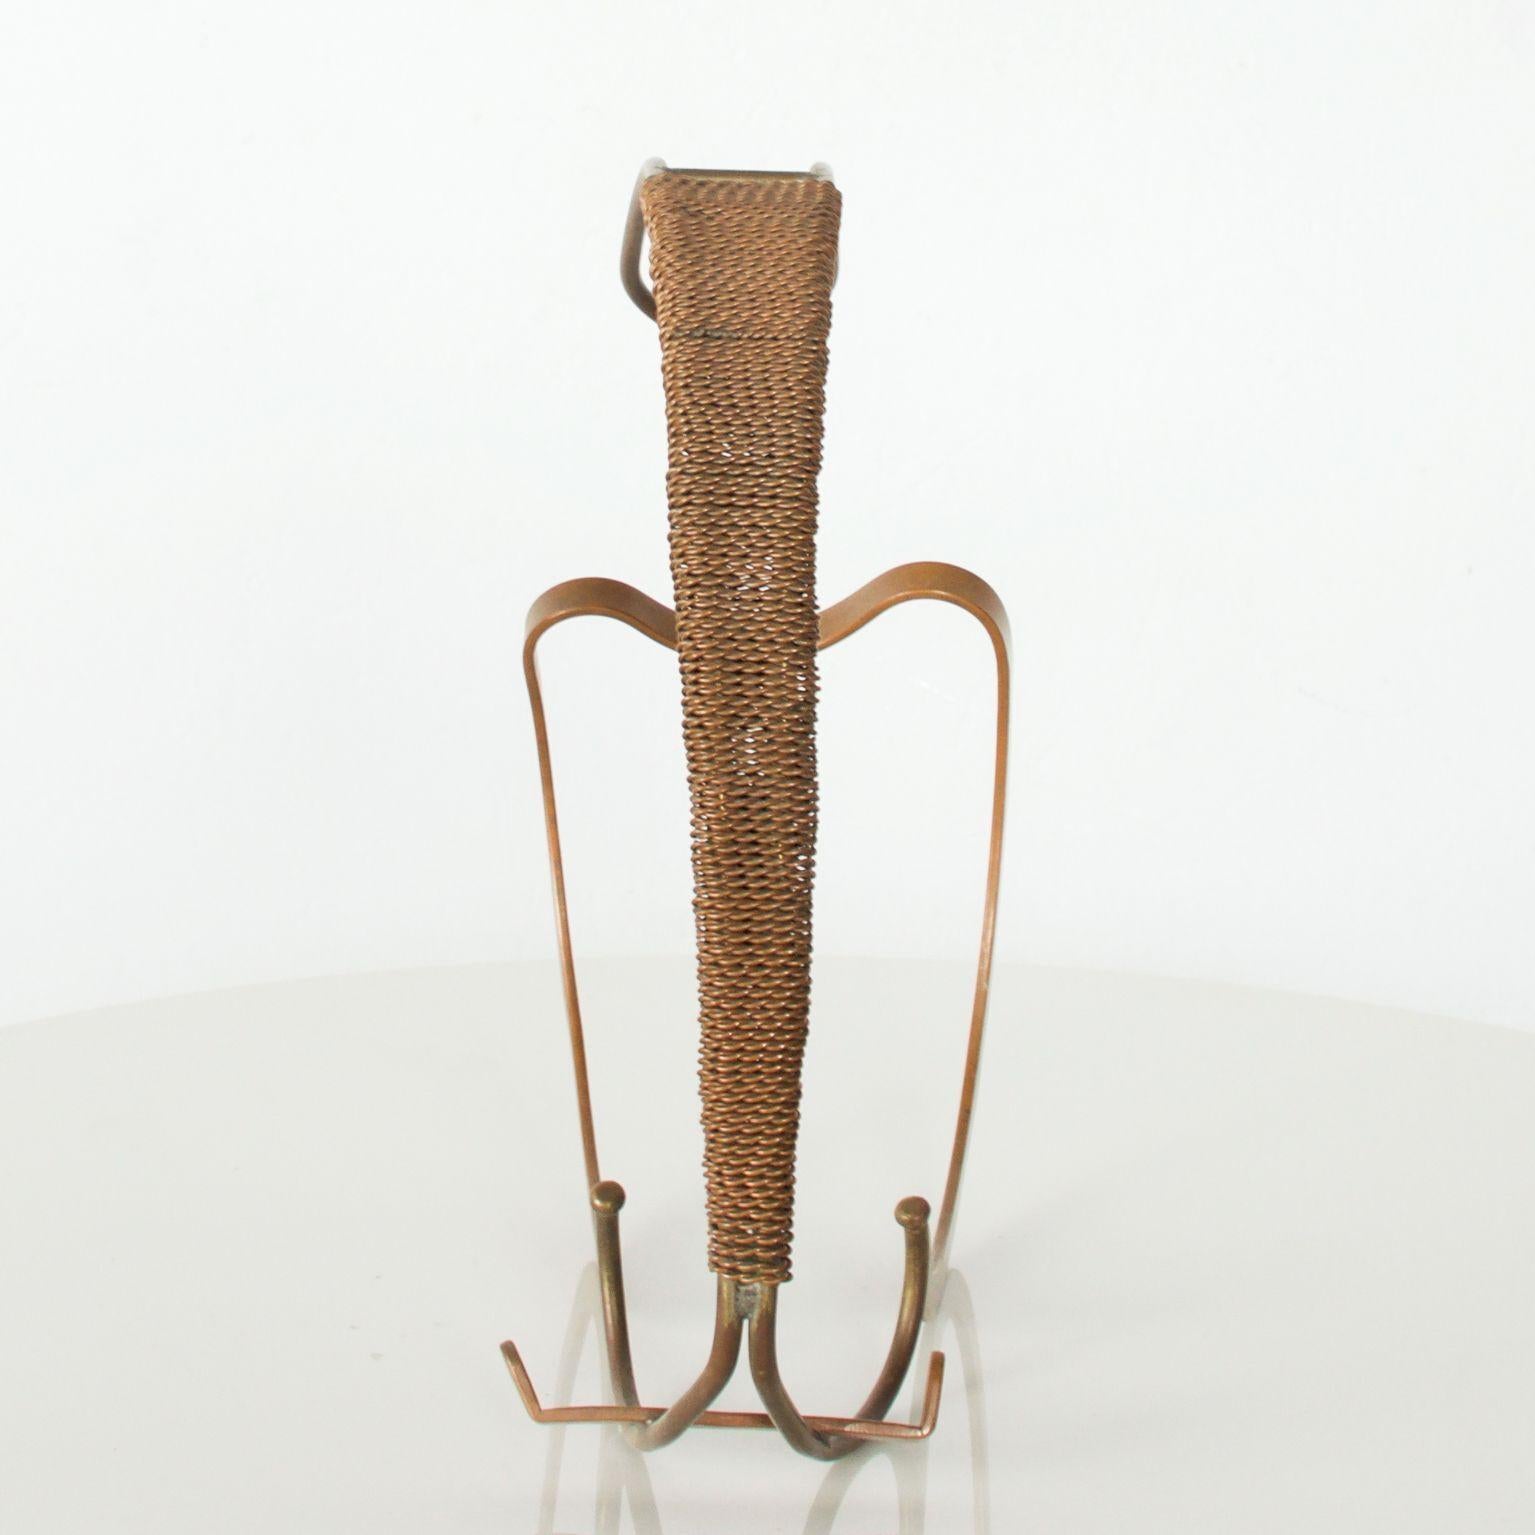 Late 20th Century Copper Modern Art Sculptural Wine Bottle Holder Carry Cradle 1980s